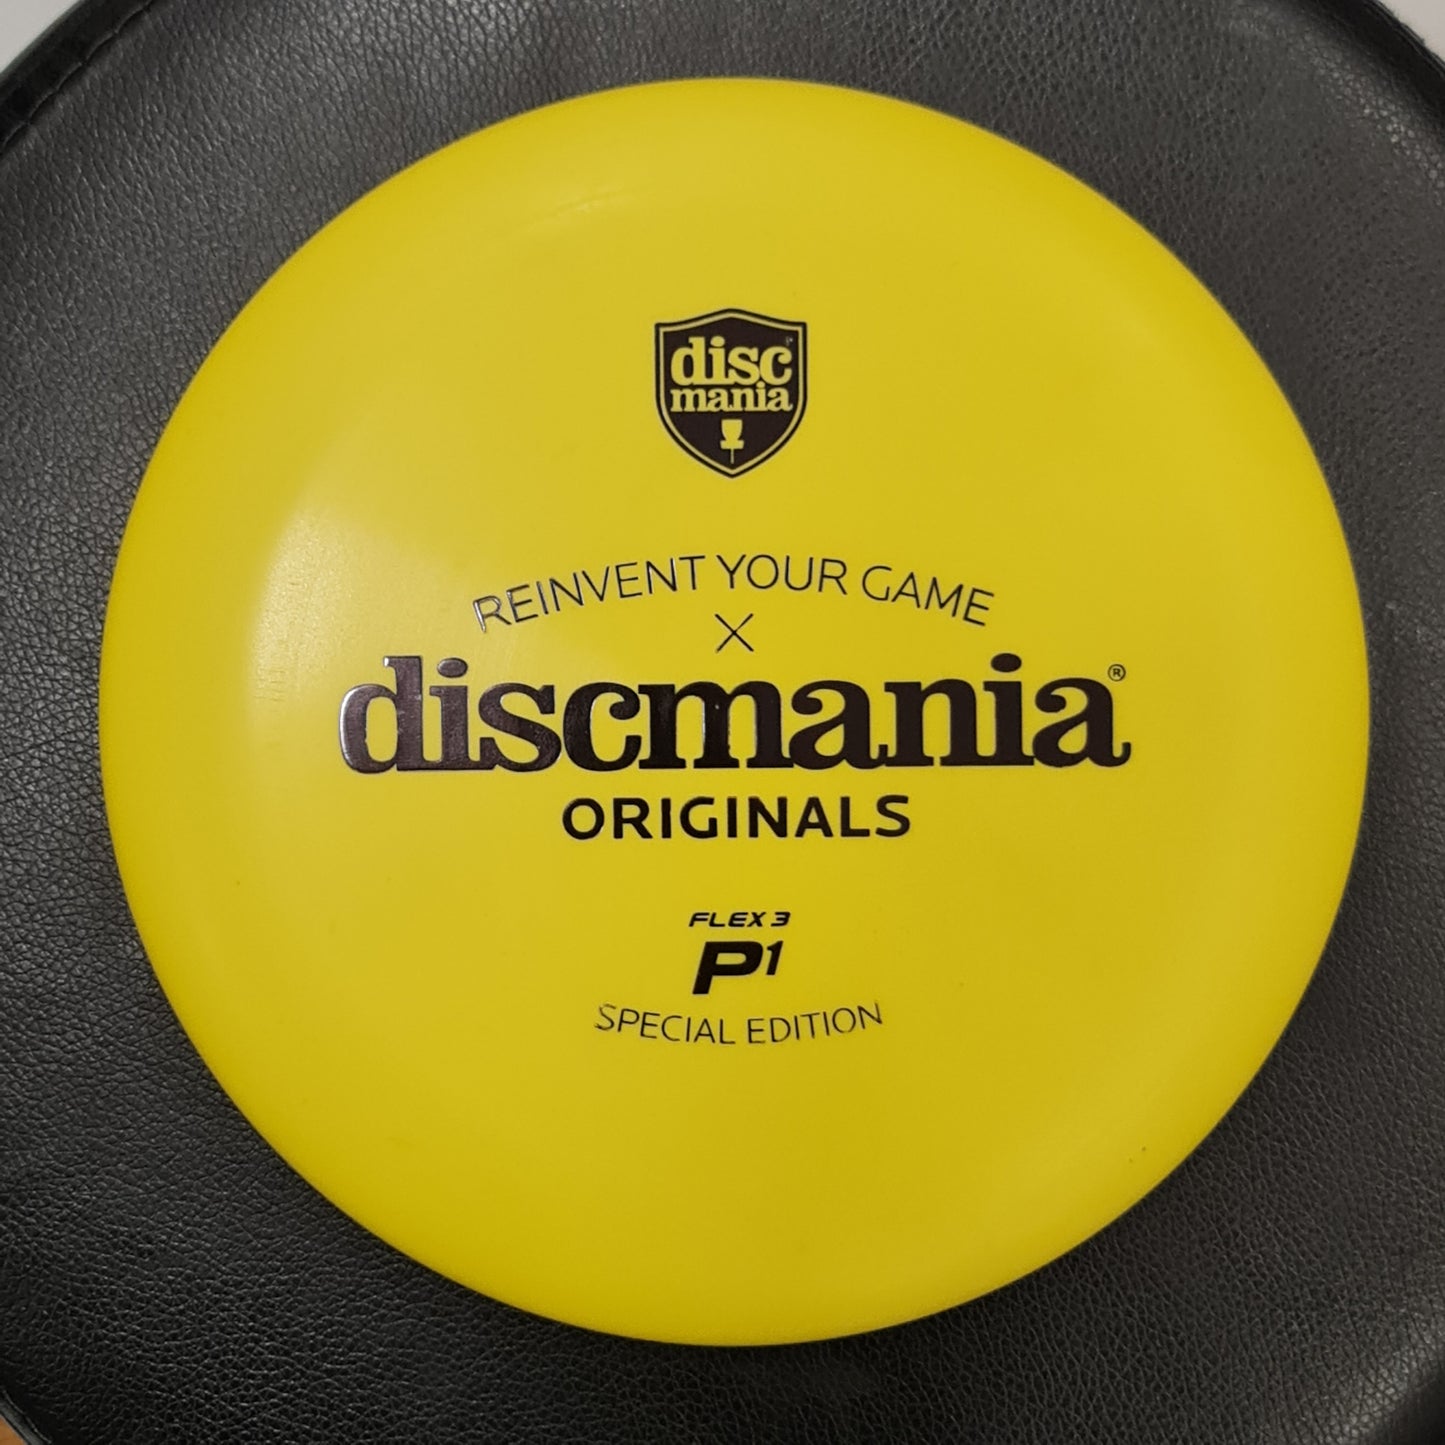 Discmania Original P1 Flex3 Special Edition